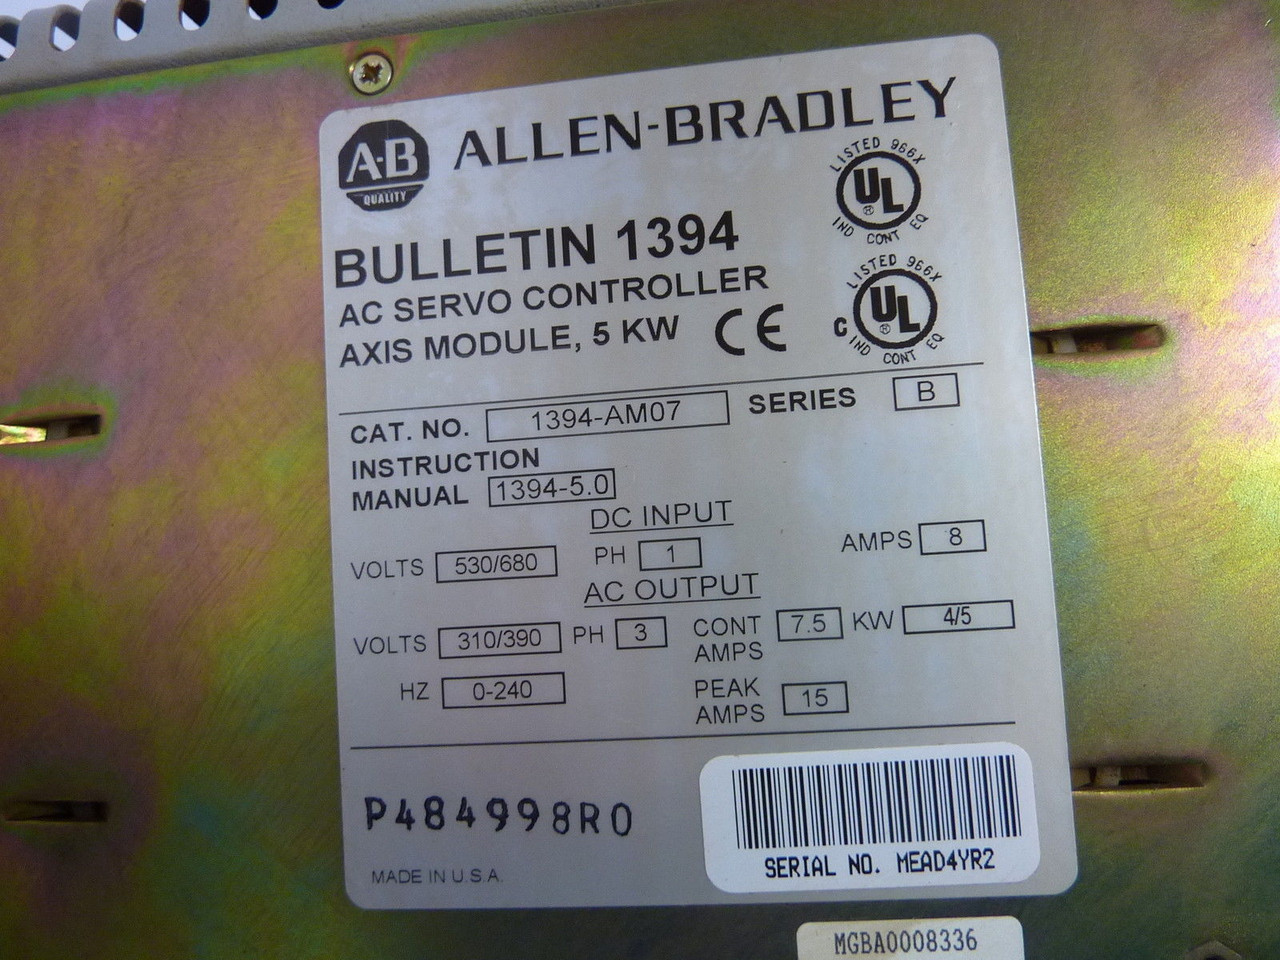 Allen-Bradley 1394-AM07 Axis Module SER B 310/390V 7.5-15A 0-240Hz 3PH USED